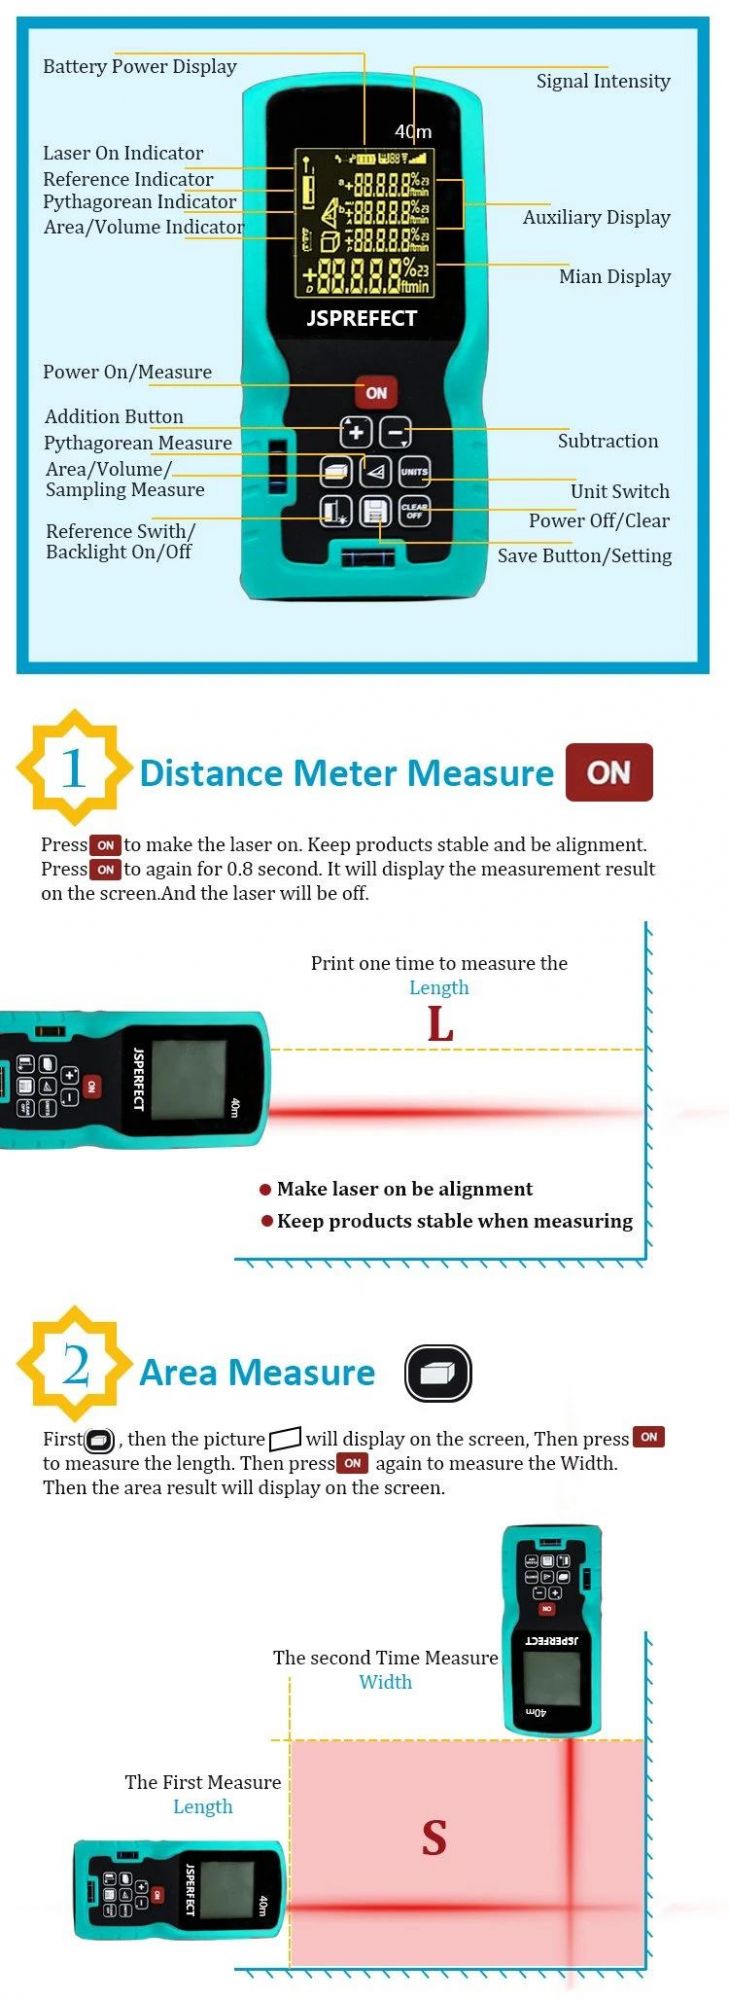 40m Area Measurement Instrument Laser Rangefinder